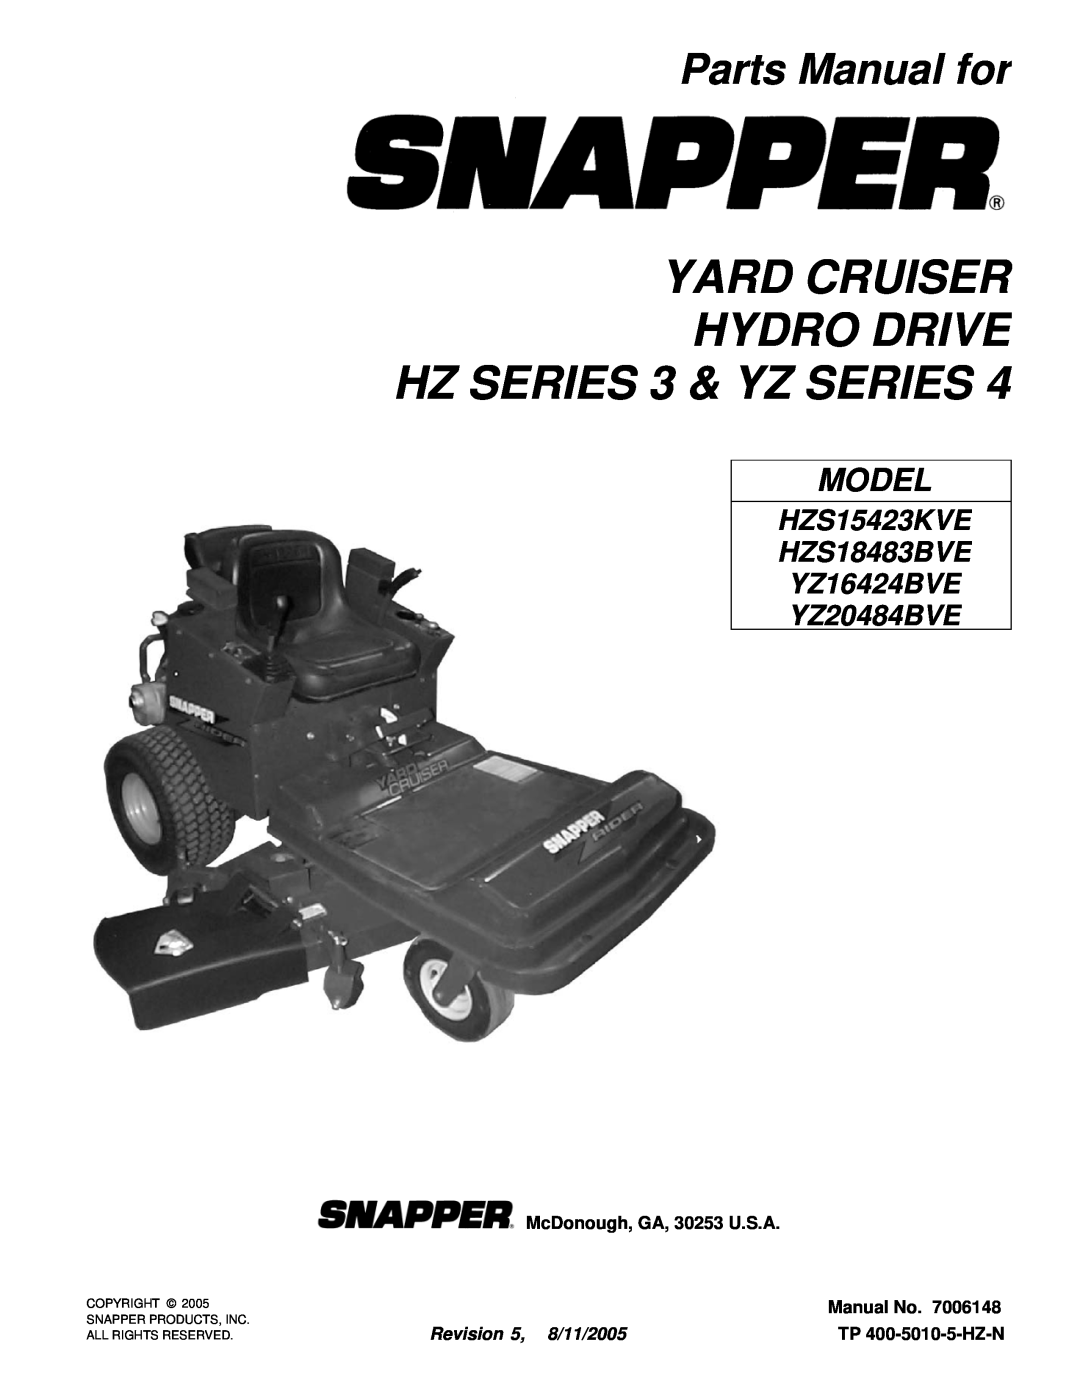 Snapper HZS15423KVE manual YARD CRUISER HYDRO DRIVE HZ SERIES 3 & YZ SERIES, Parts Manual for, Model, Manual No 